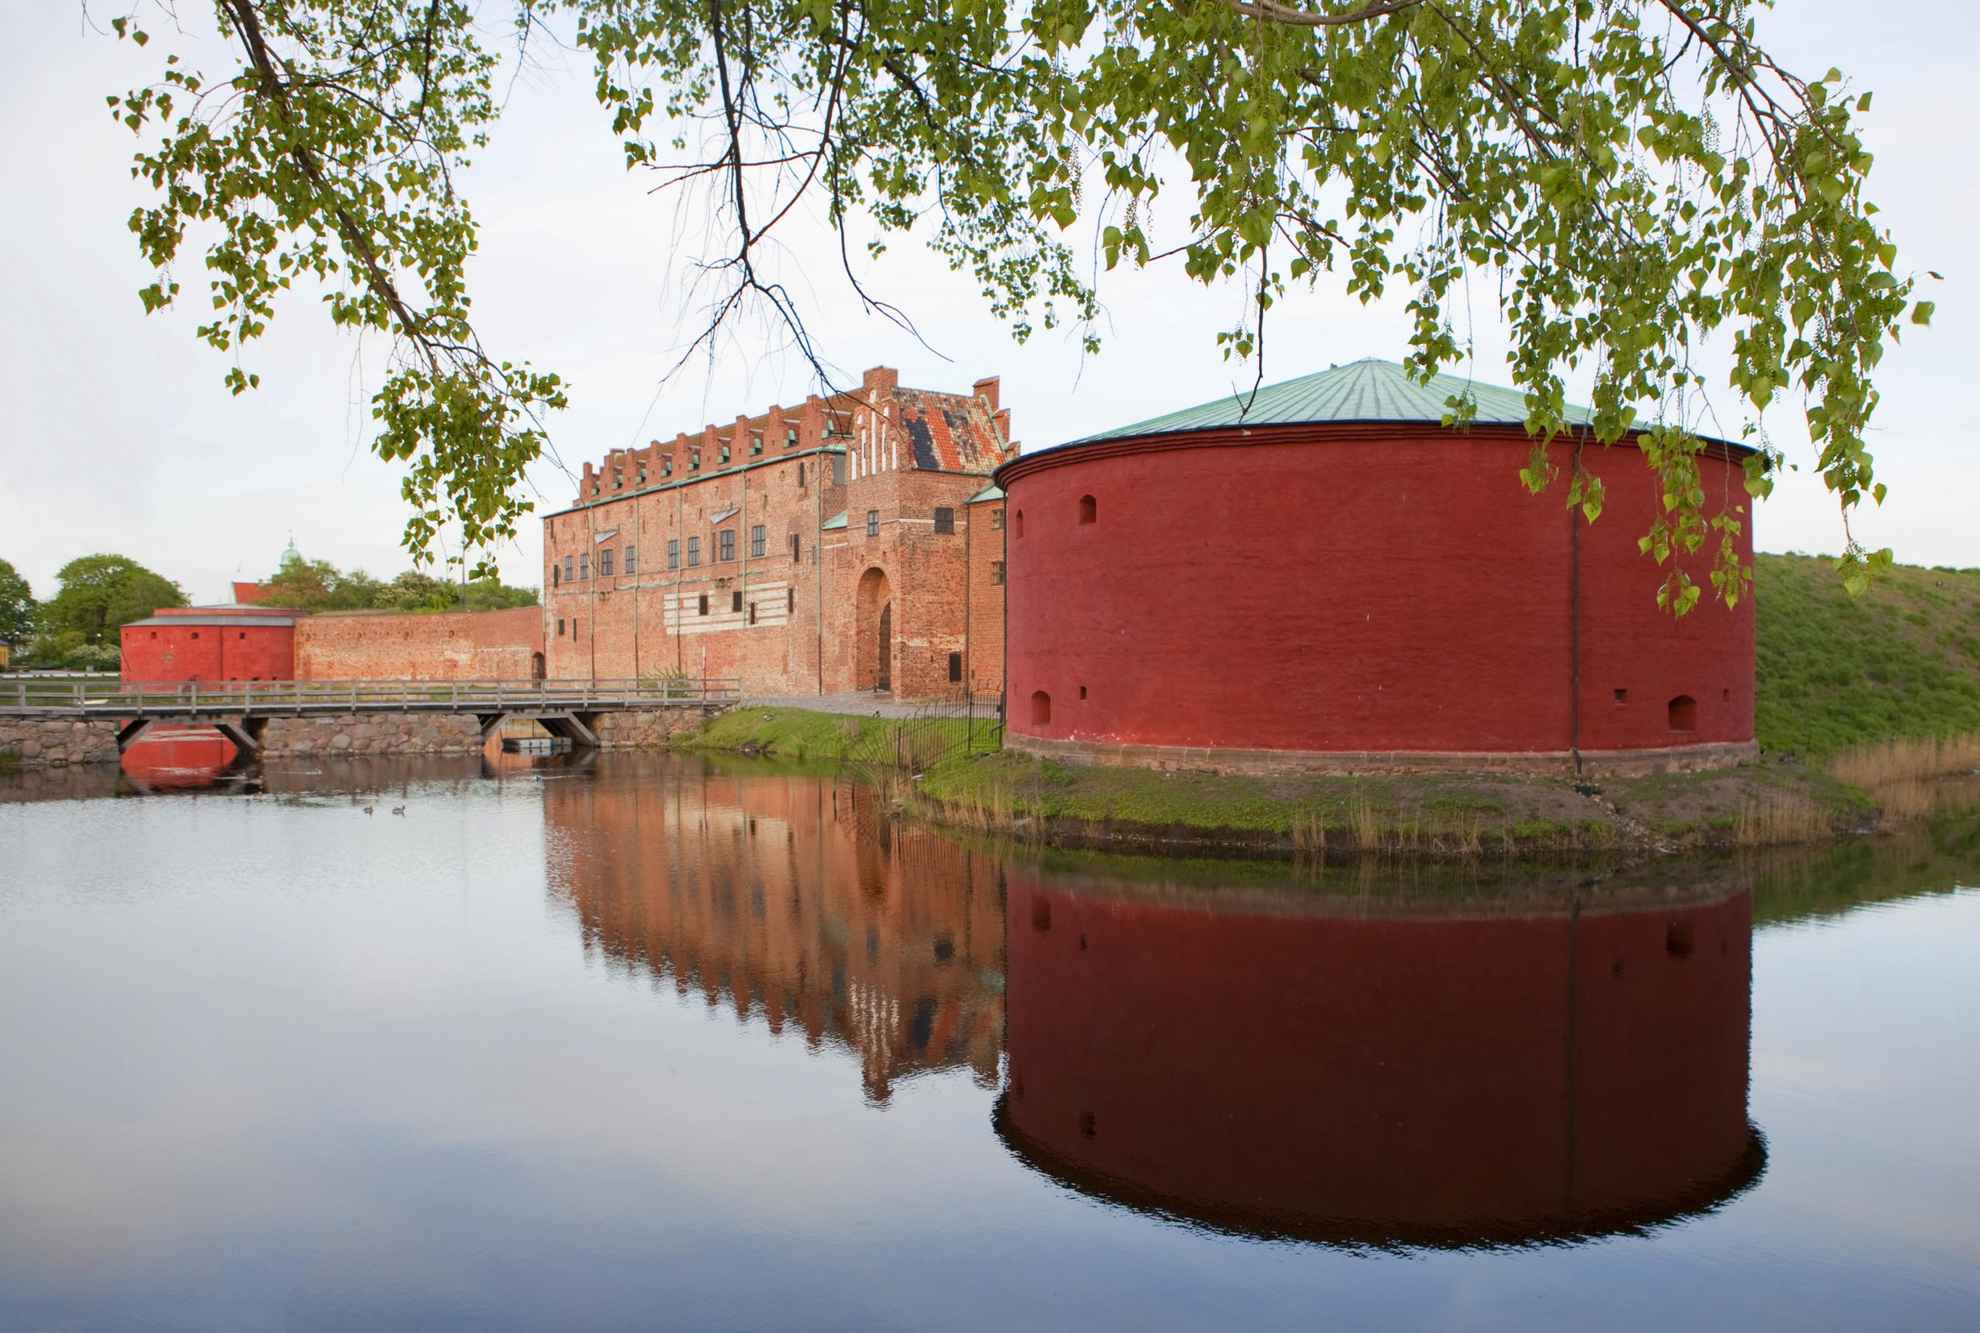 Malmöhus castle, Skåne